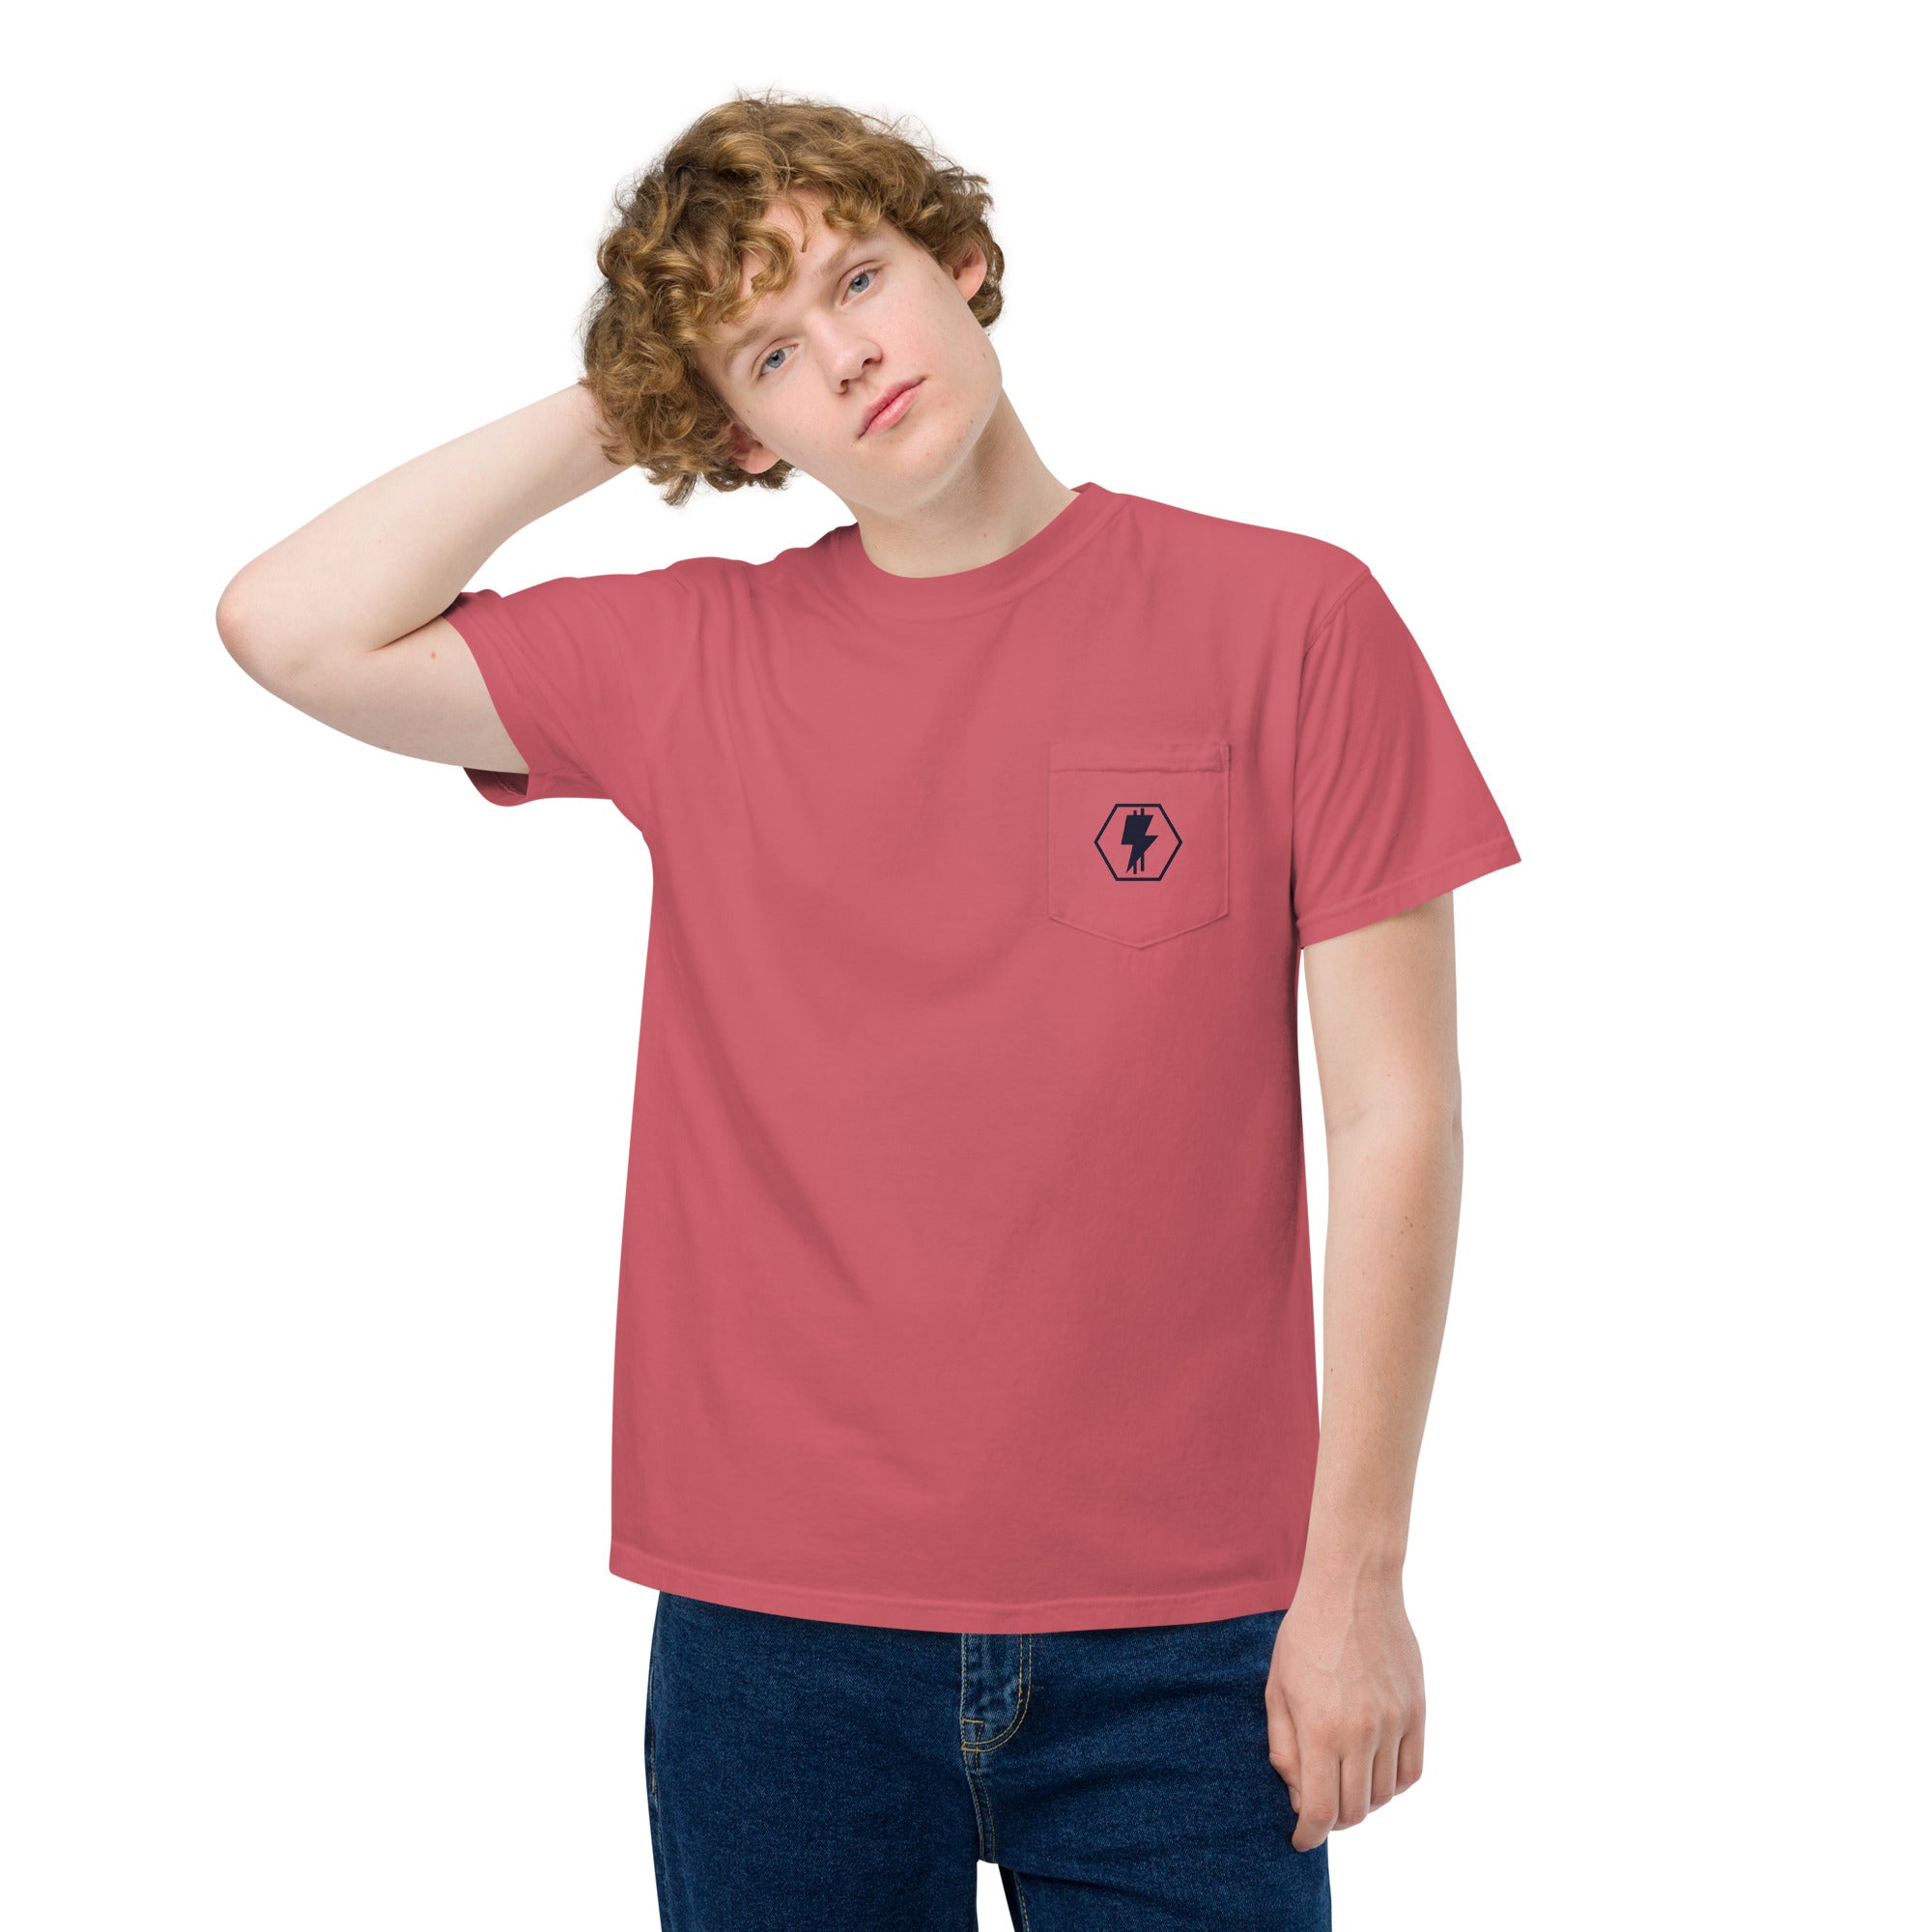 'Gangg Signs' Unisex Garment-Dyed Pocket T-Shirt